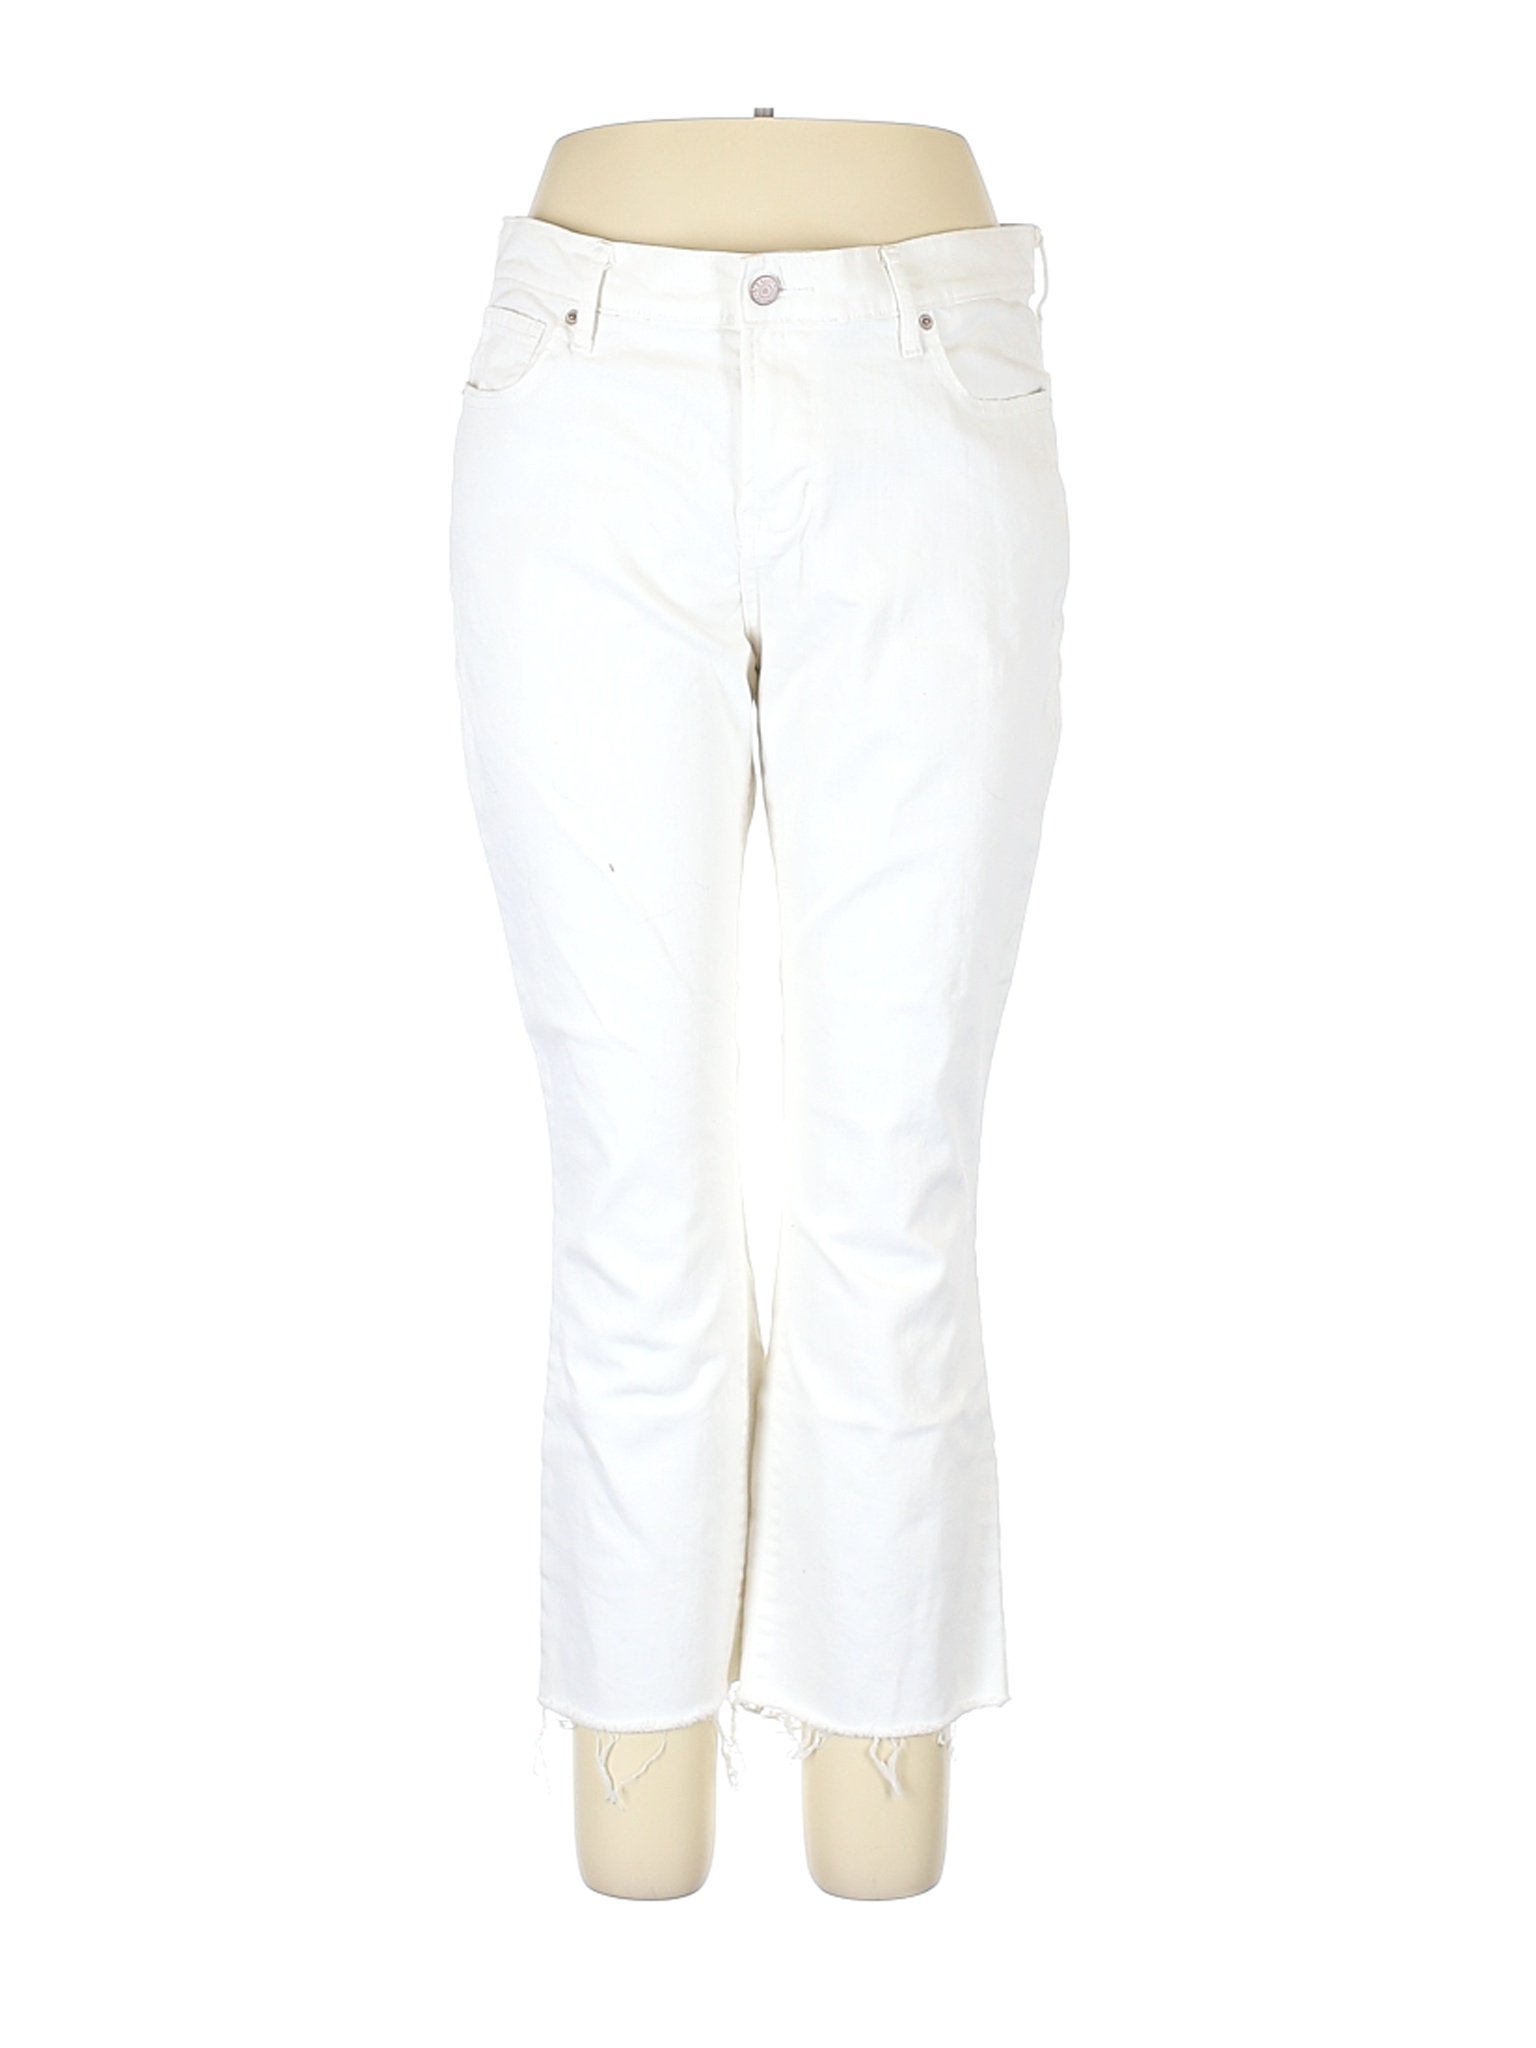 Old Navy Women White Jeans 14 | eBay